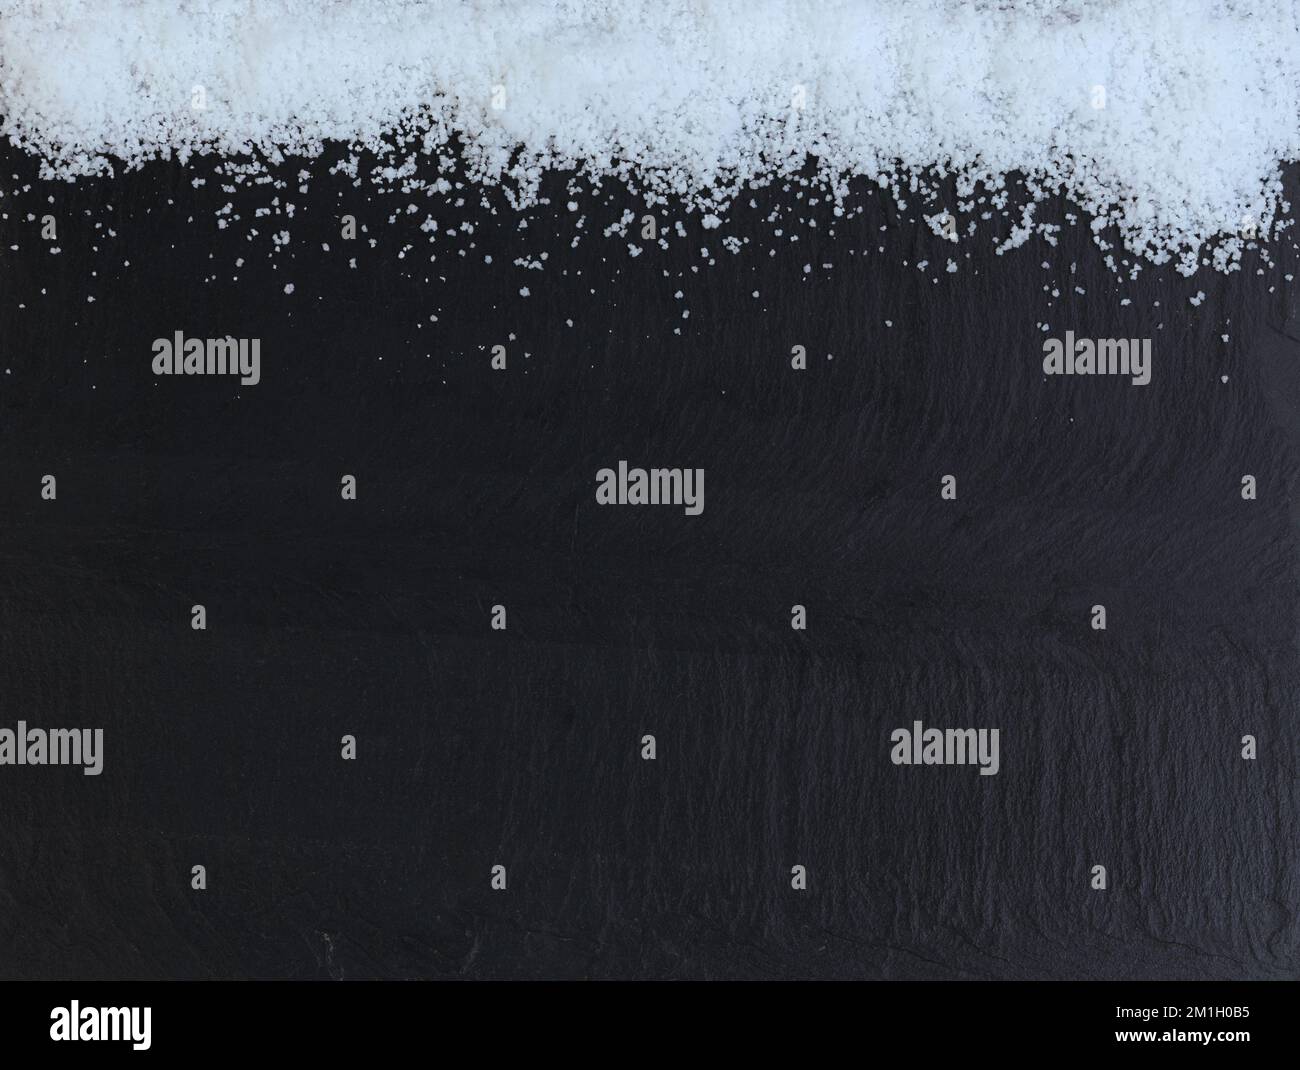 Border of Christmas snow on dark stone background Stock Photo